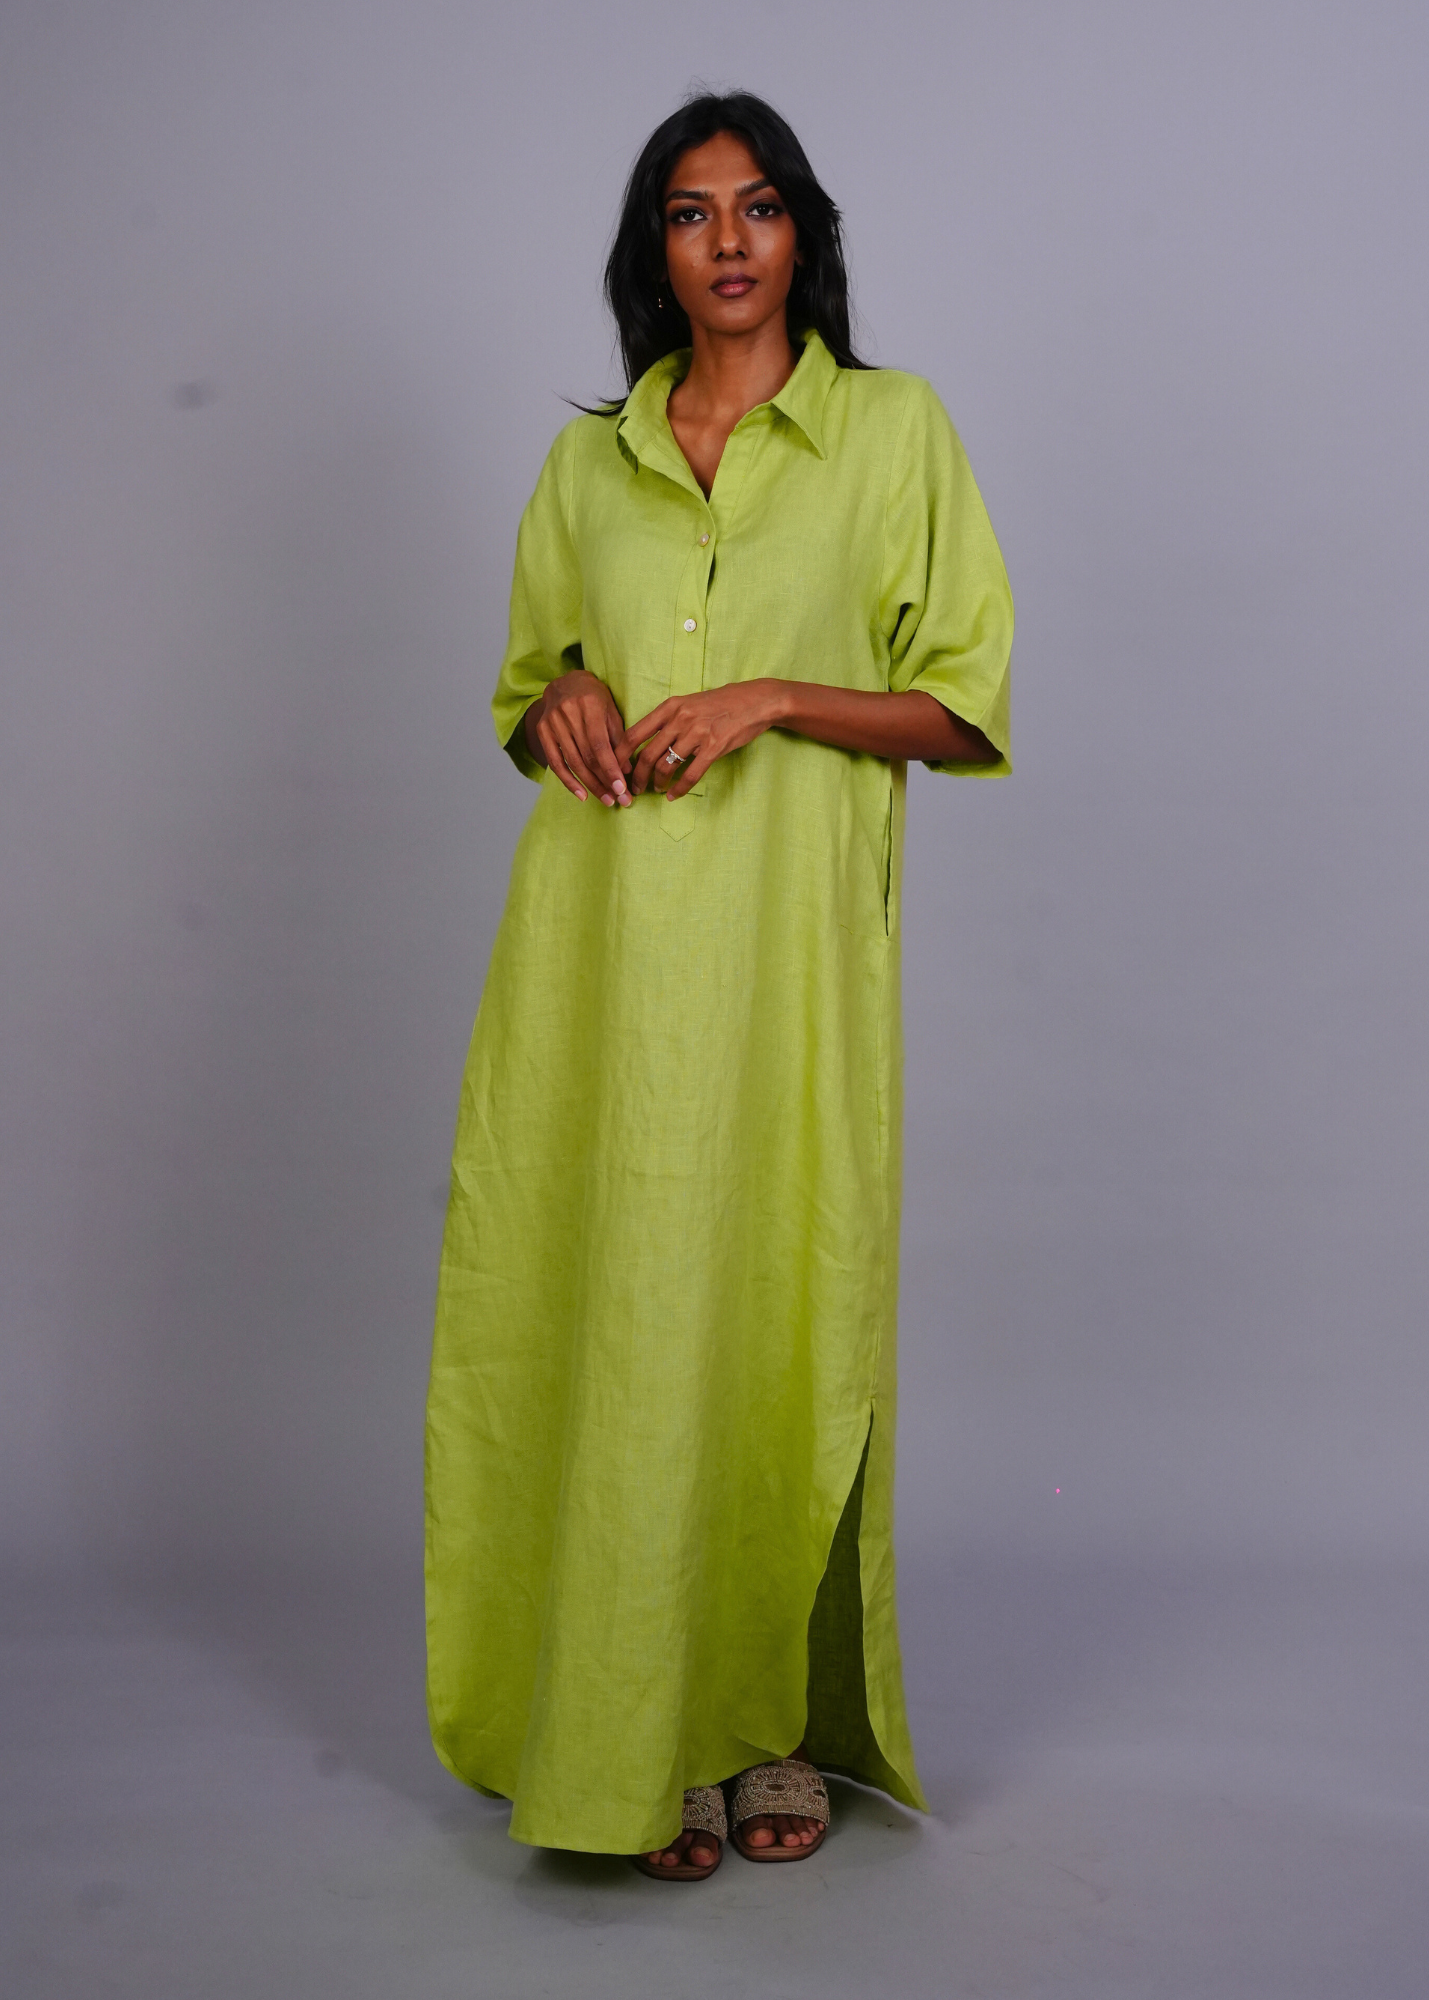 Nikki-U Lounge Dress - Cucumber Linen, a product by Azurina